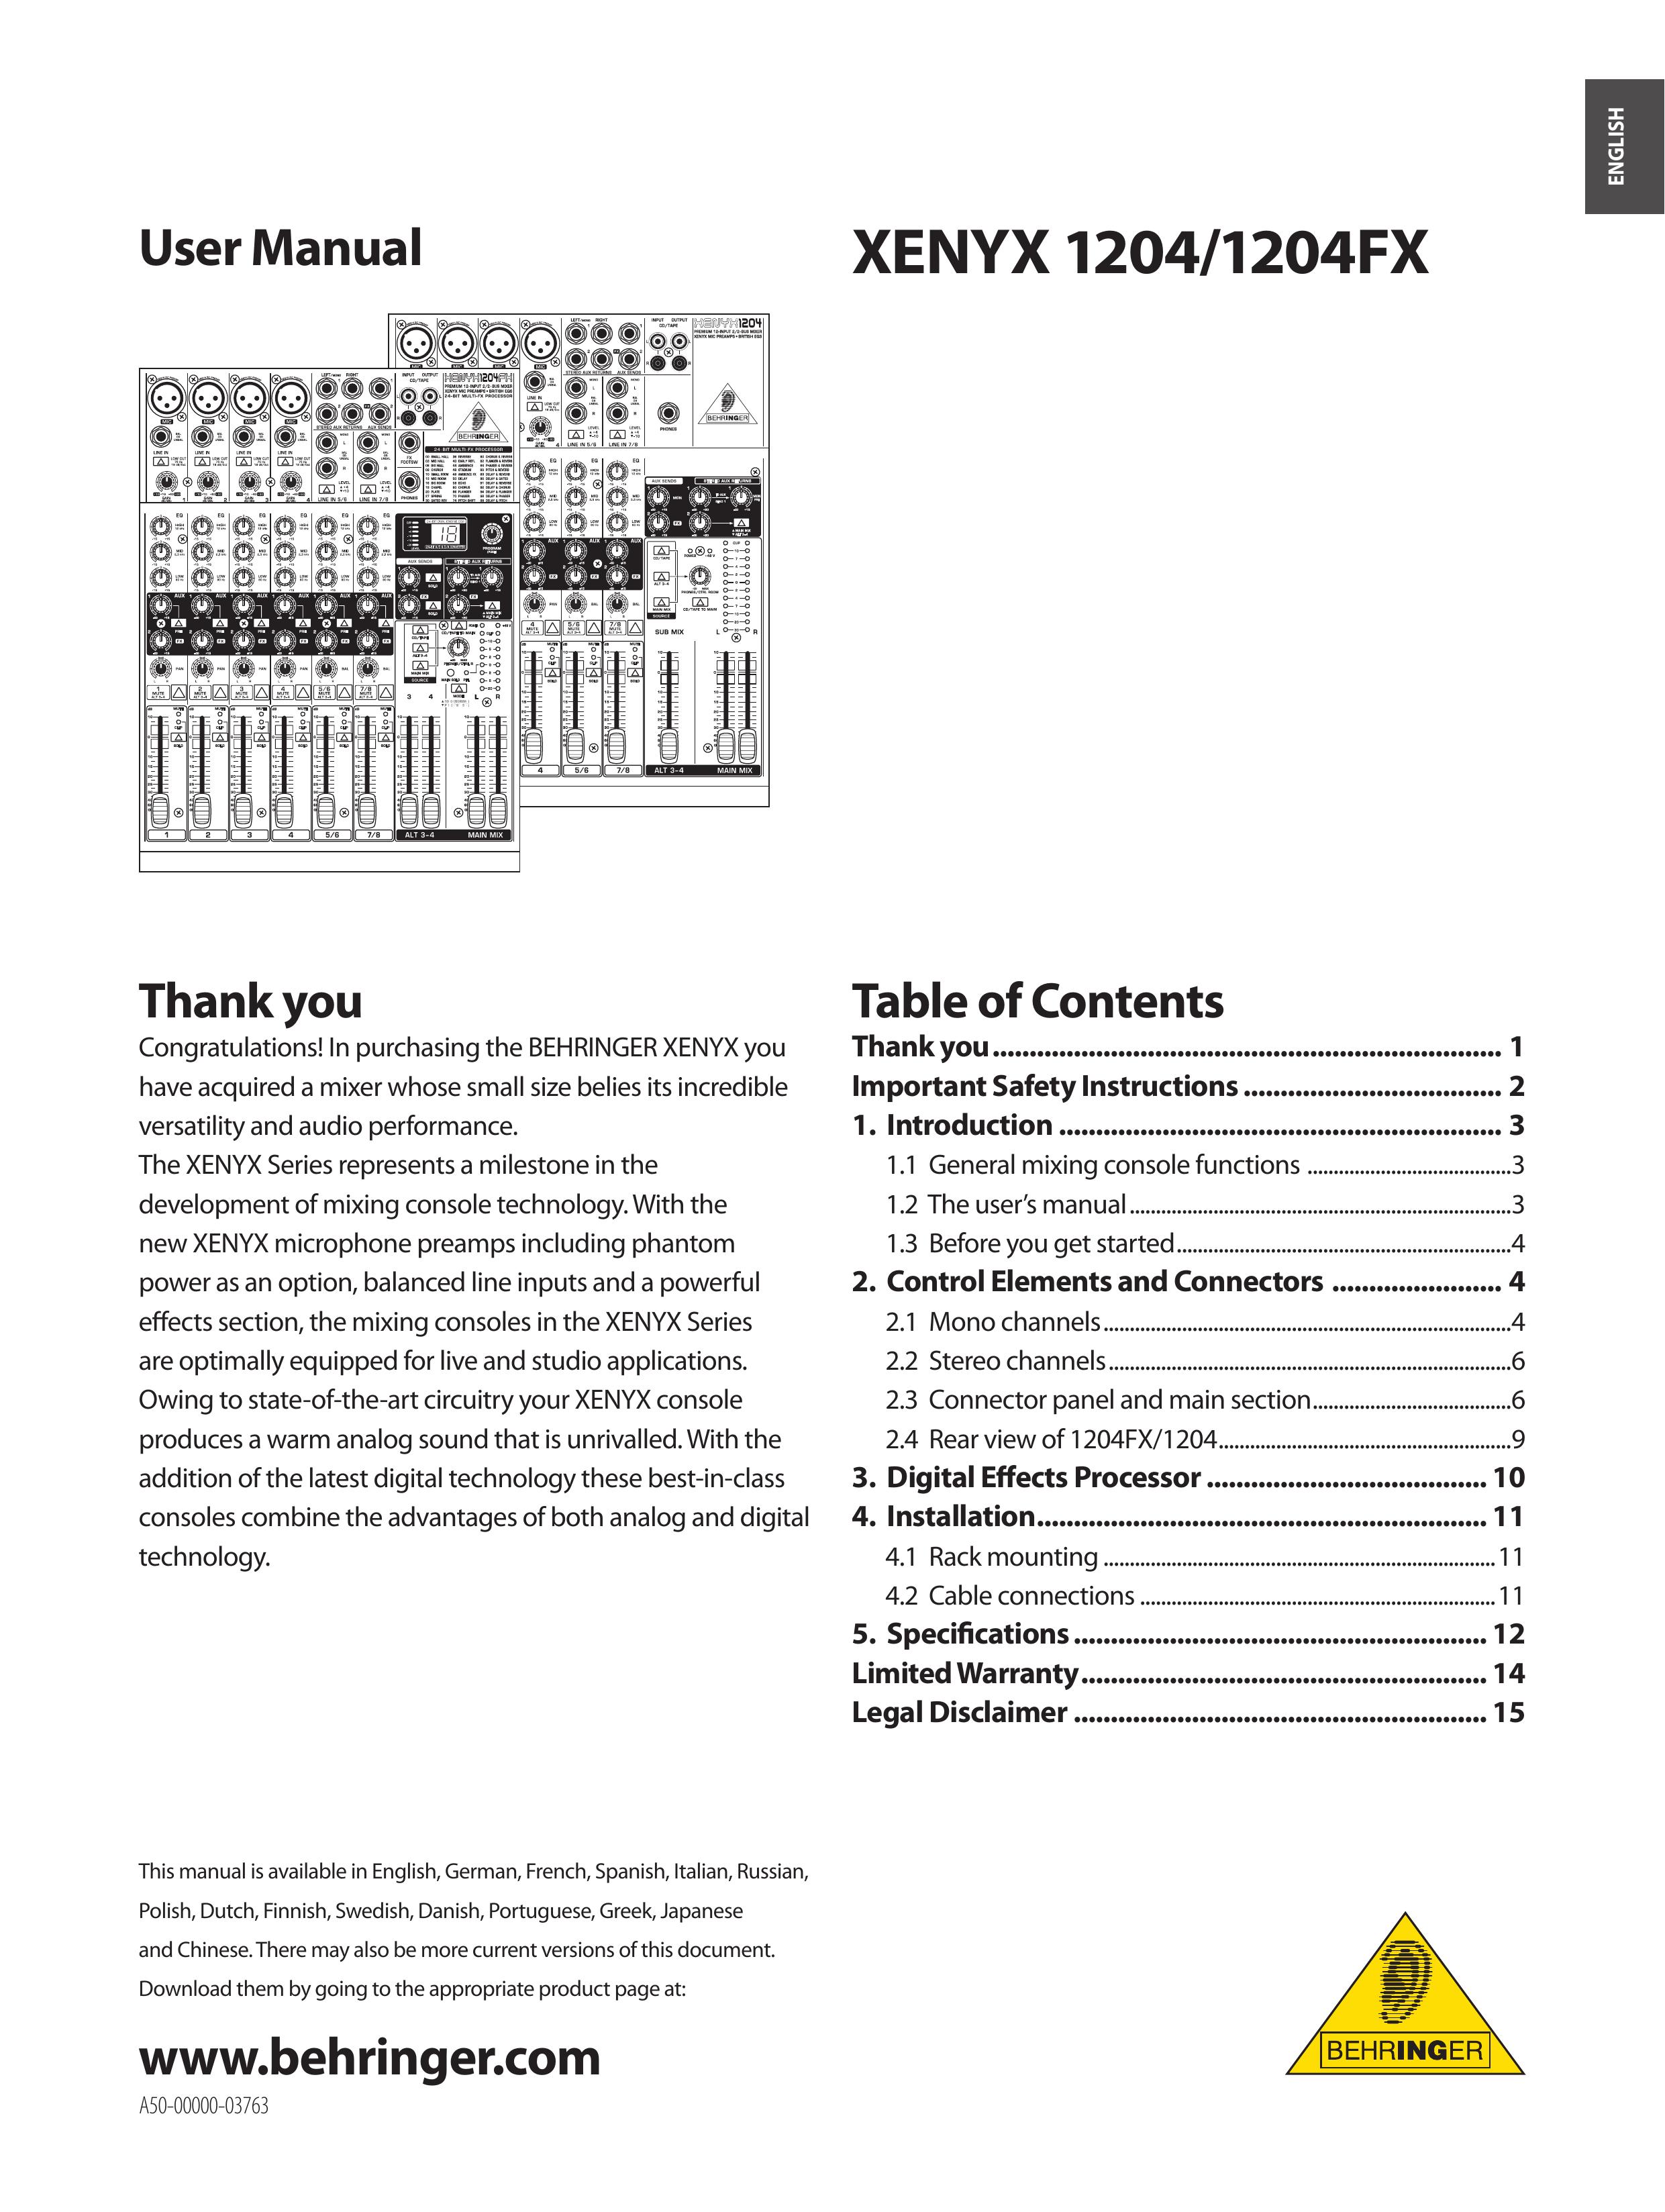 Behringer 1204/1204FX Music Mixer User Manual